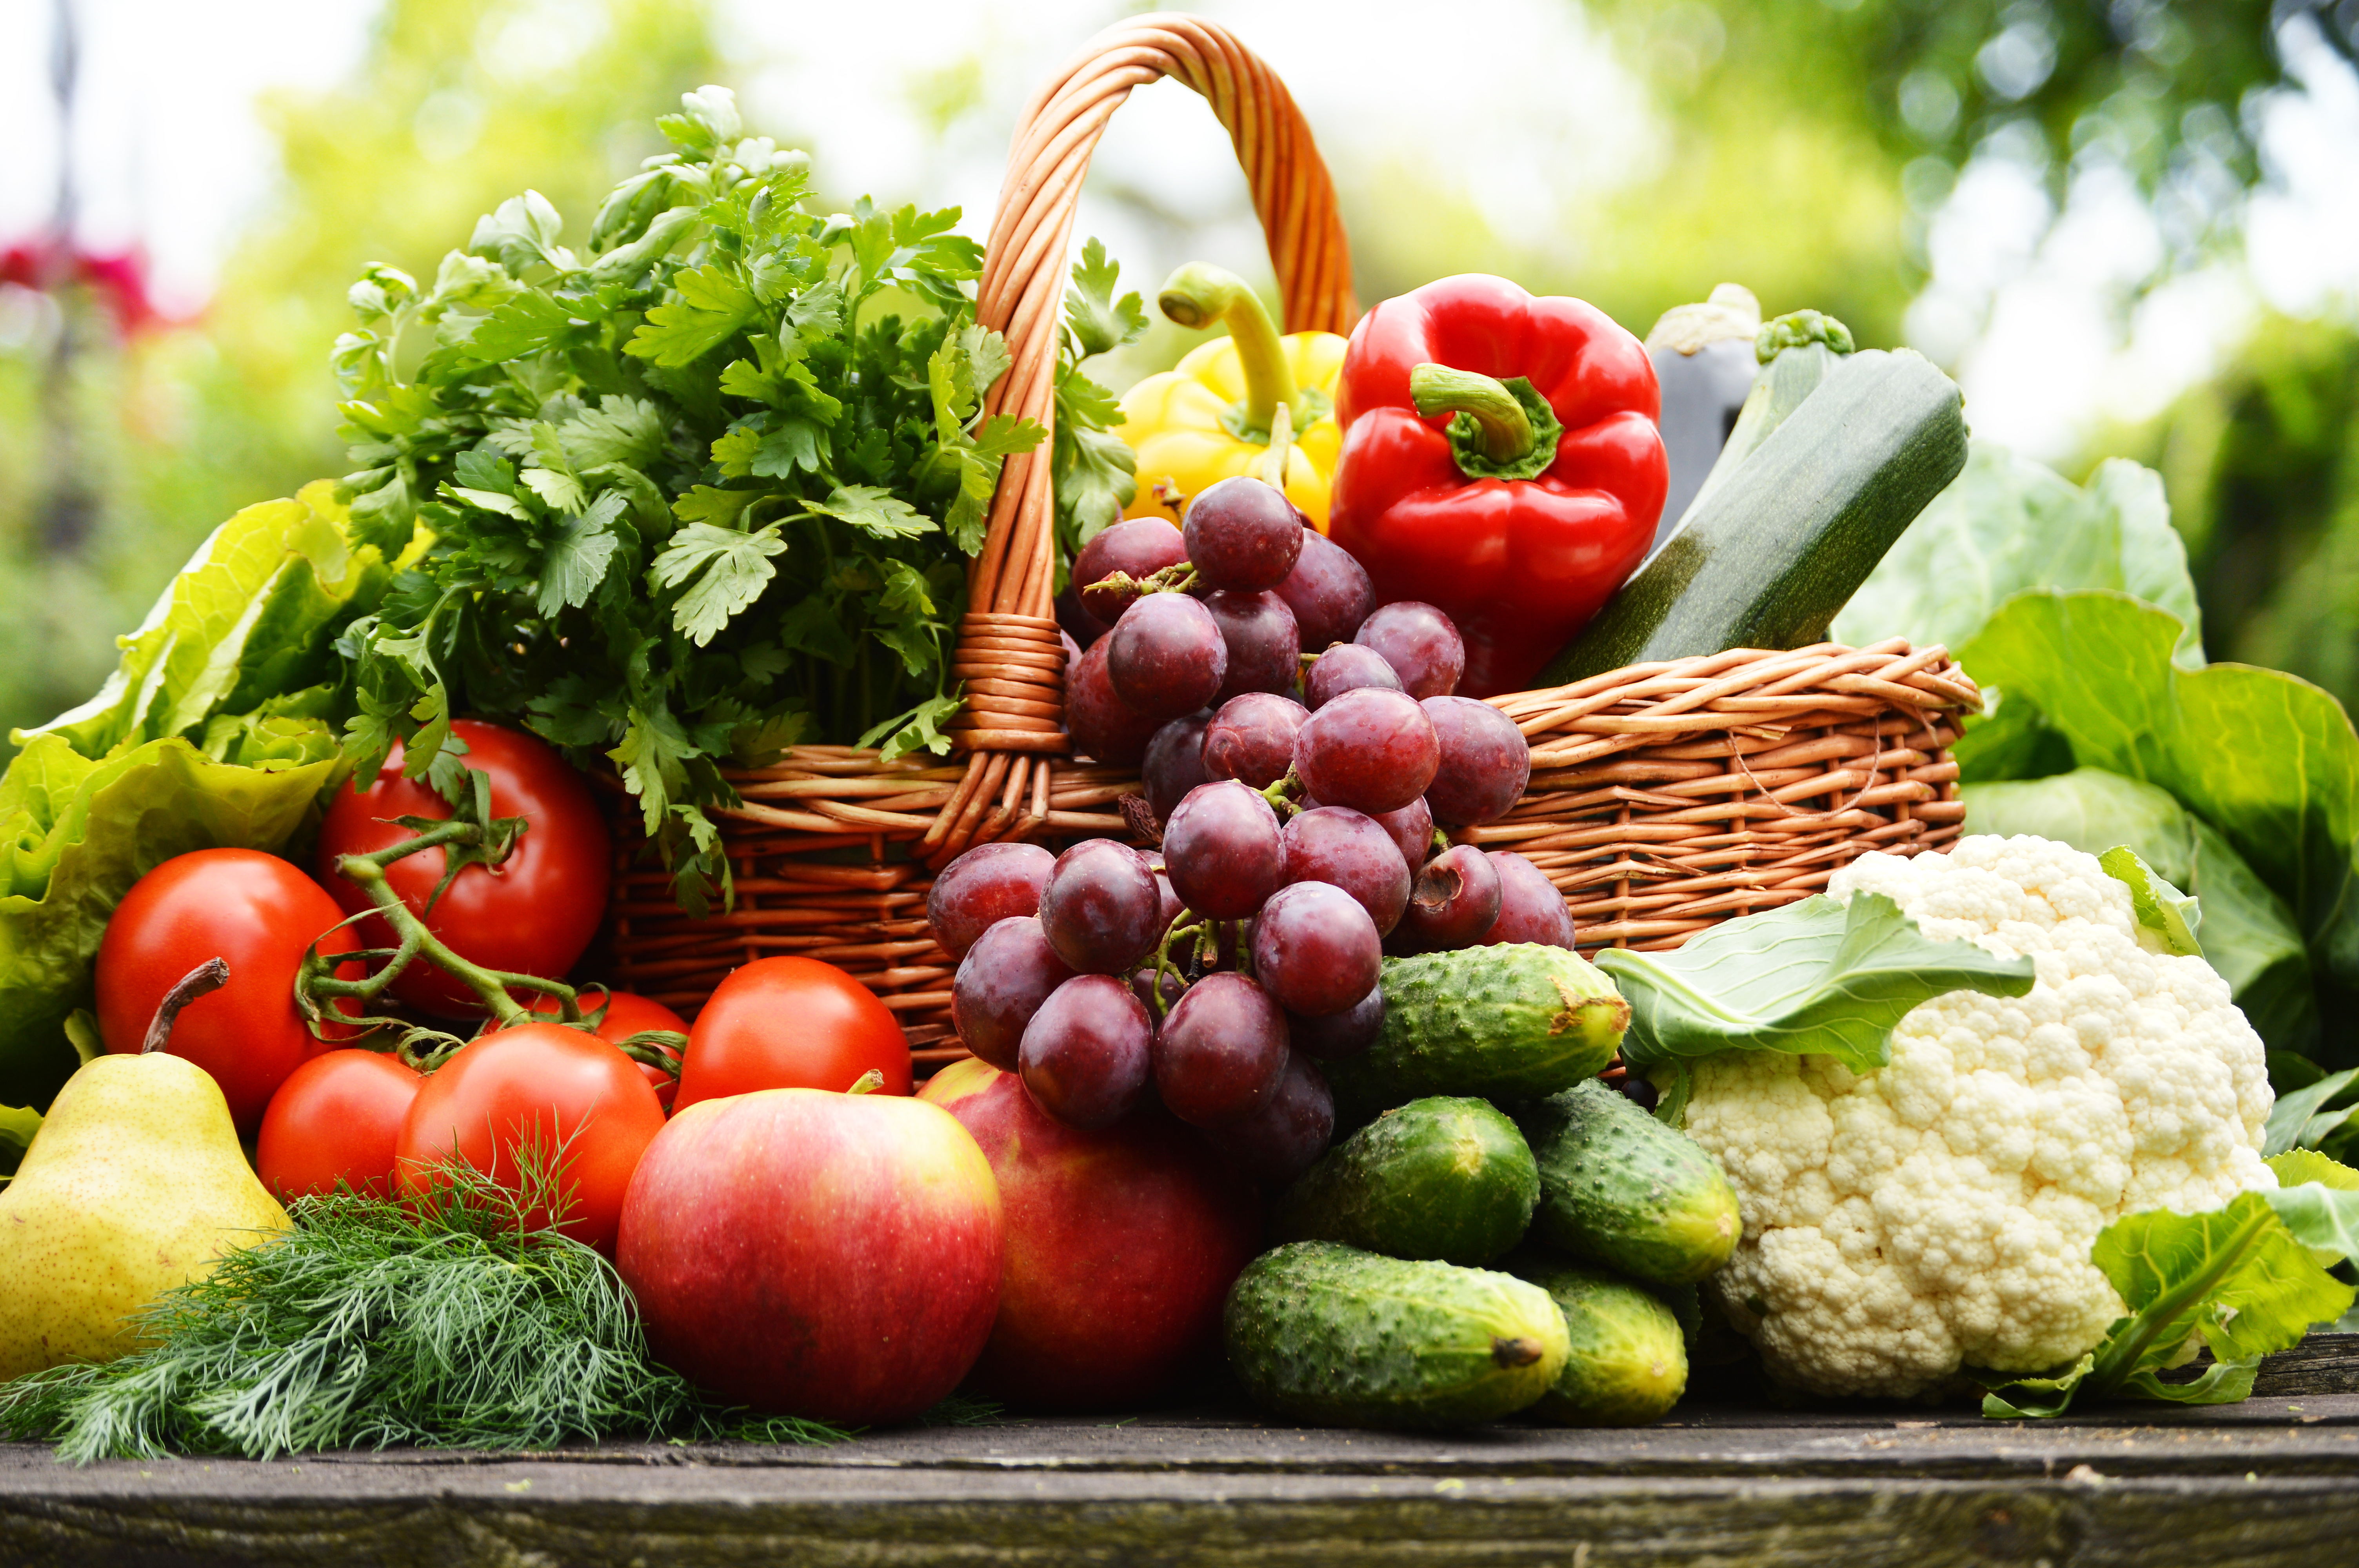 Fresh Organic Vegetables In Wicker Basket In The Garden | Leah ...